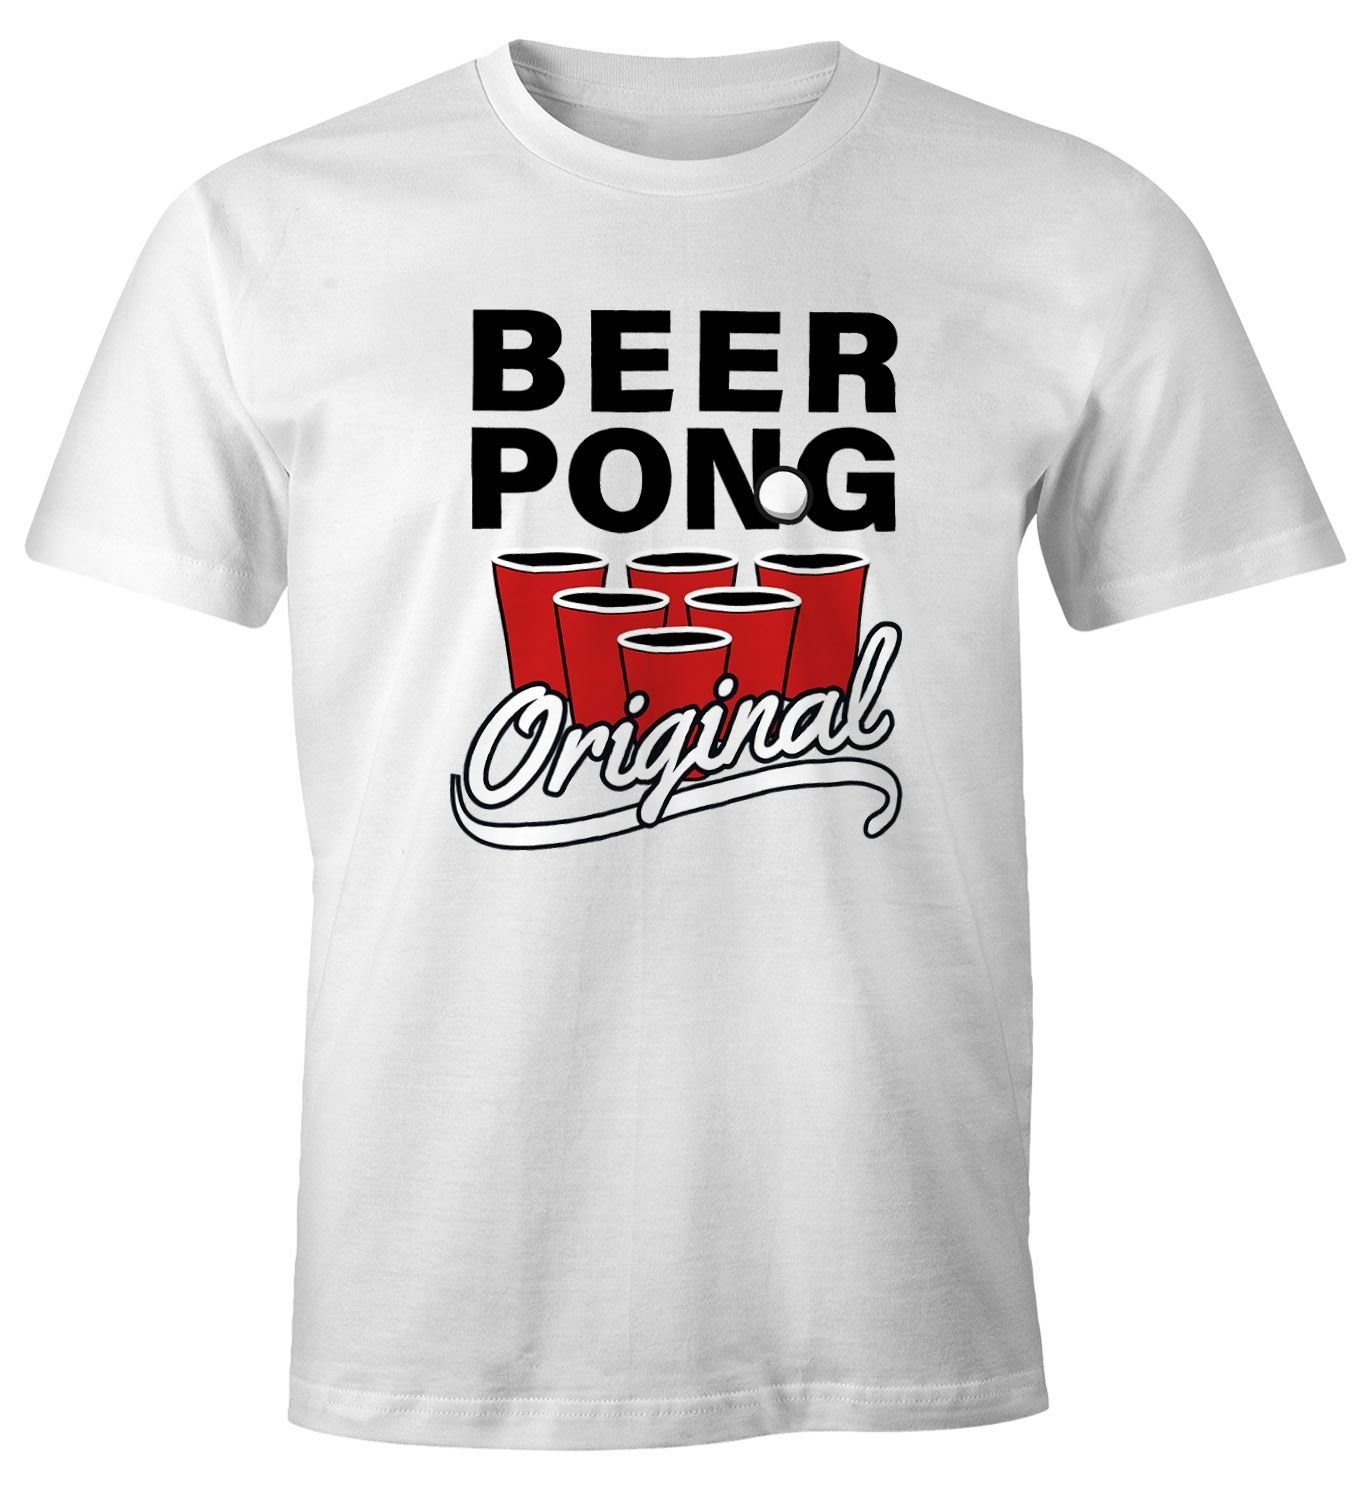 MoonWorks Print-Shirt Herren T-Shirt Beer Pong Original Bier Fun-Shirt Moonworks® mit Print weiß